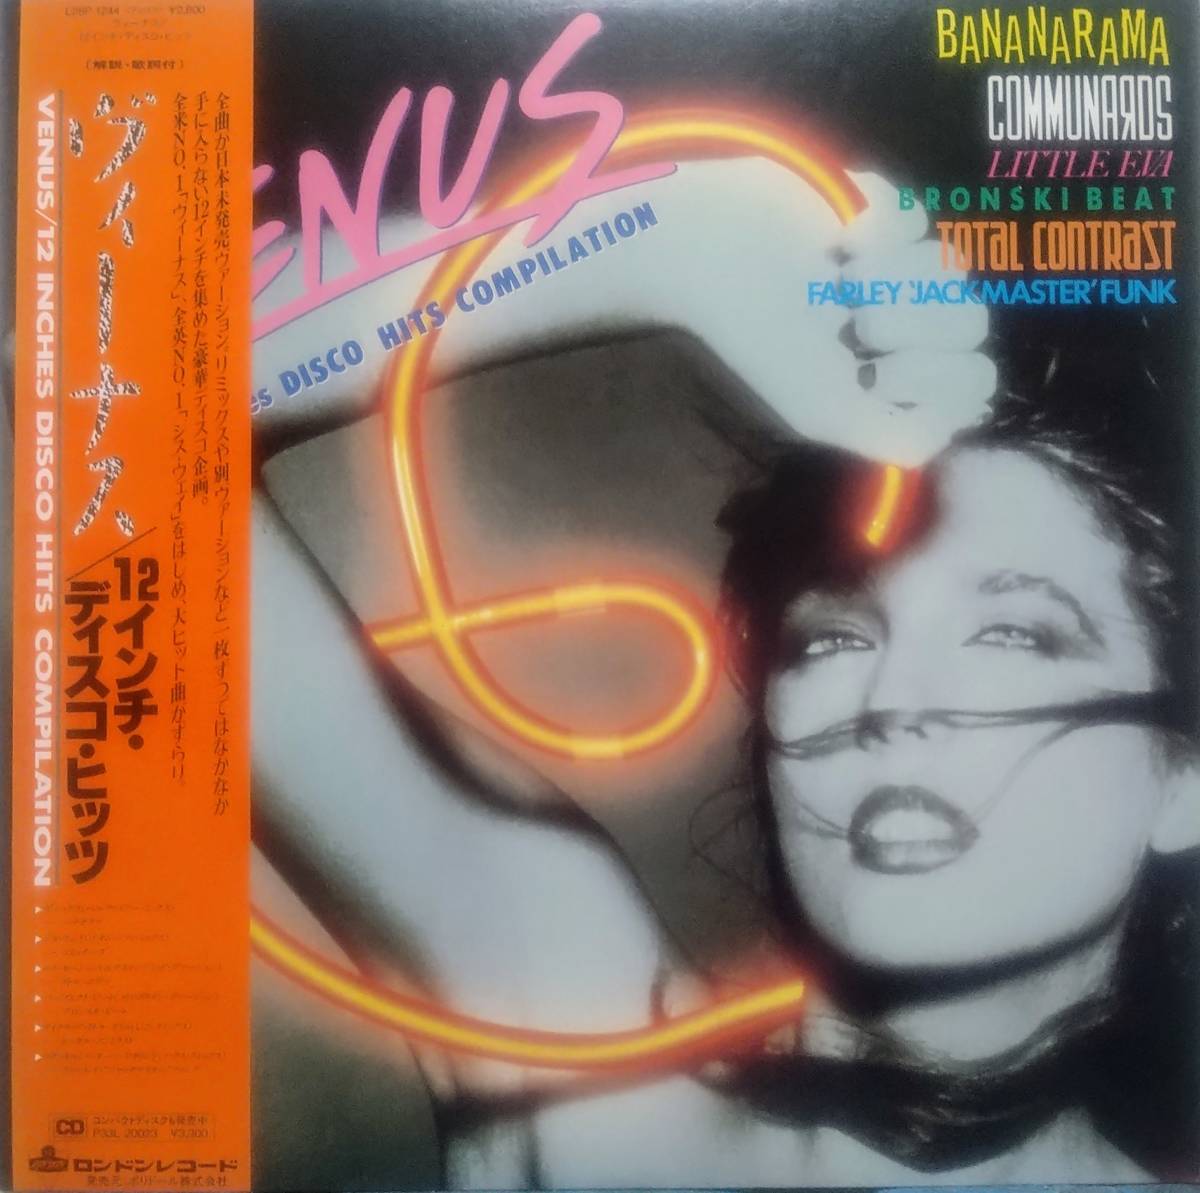 【LP Euro Beat】V.A Venus 12 Inches Disco Hits Compilation JPN盤 Bananarama.The Communards.Little Eva.Total Contrast 他 収録！_ジャケット